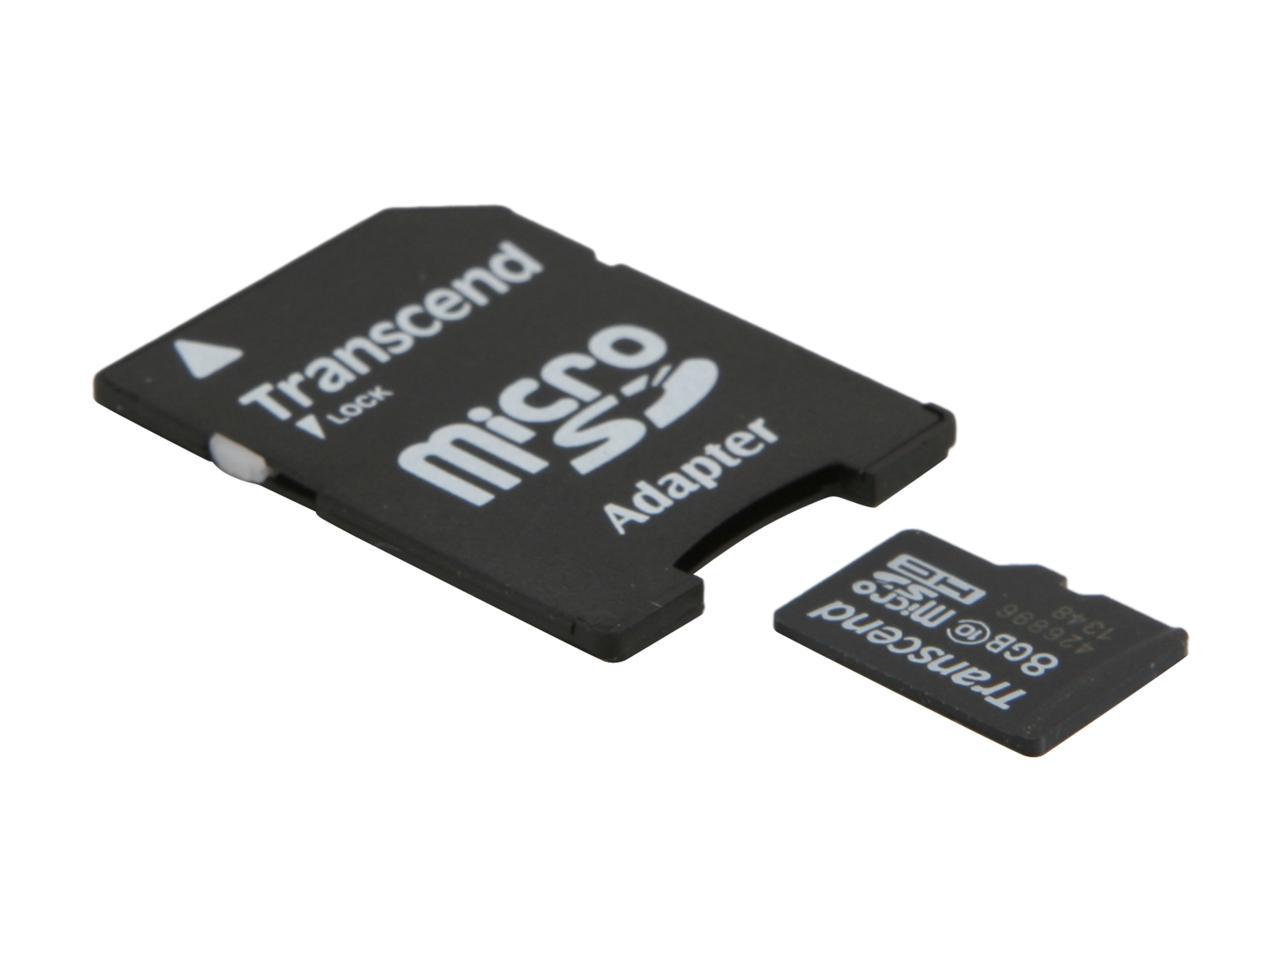 Transcend 8GB microSDHC Flash Card Model TS8GUSDHC10